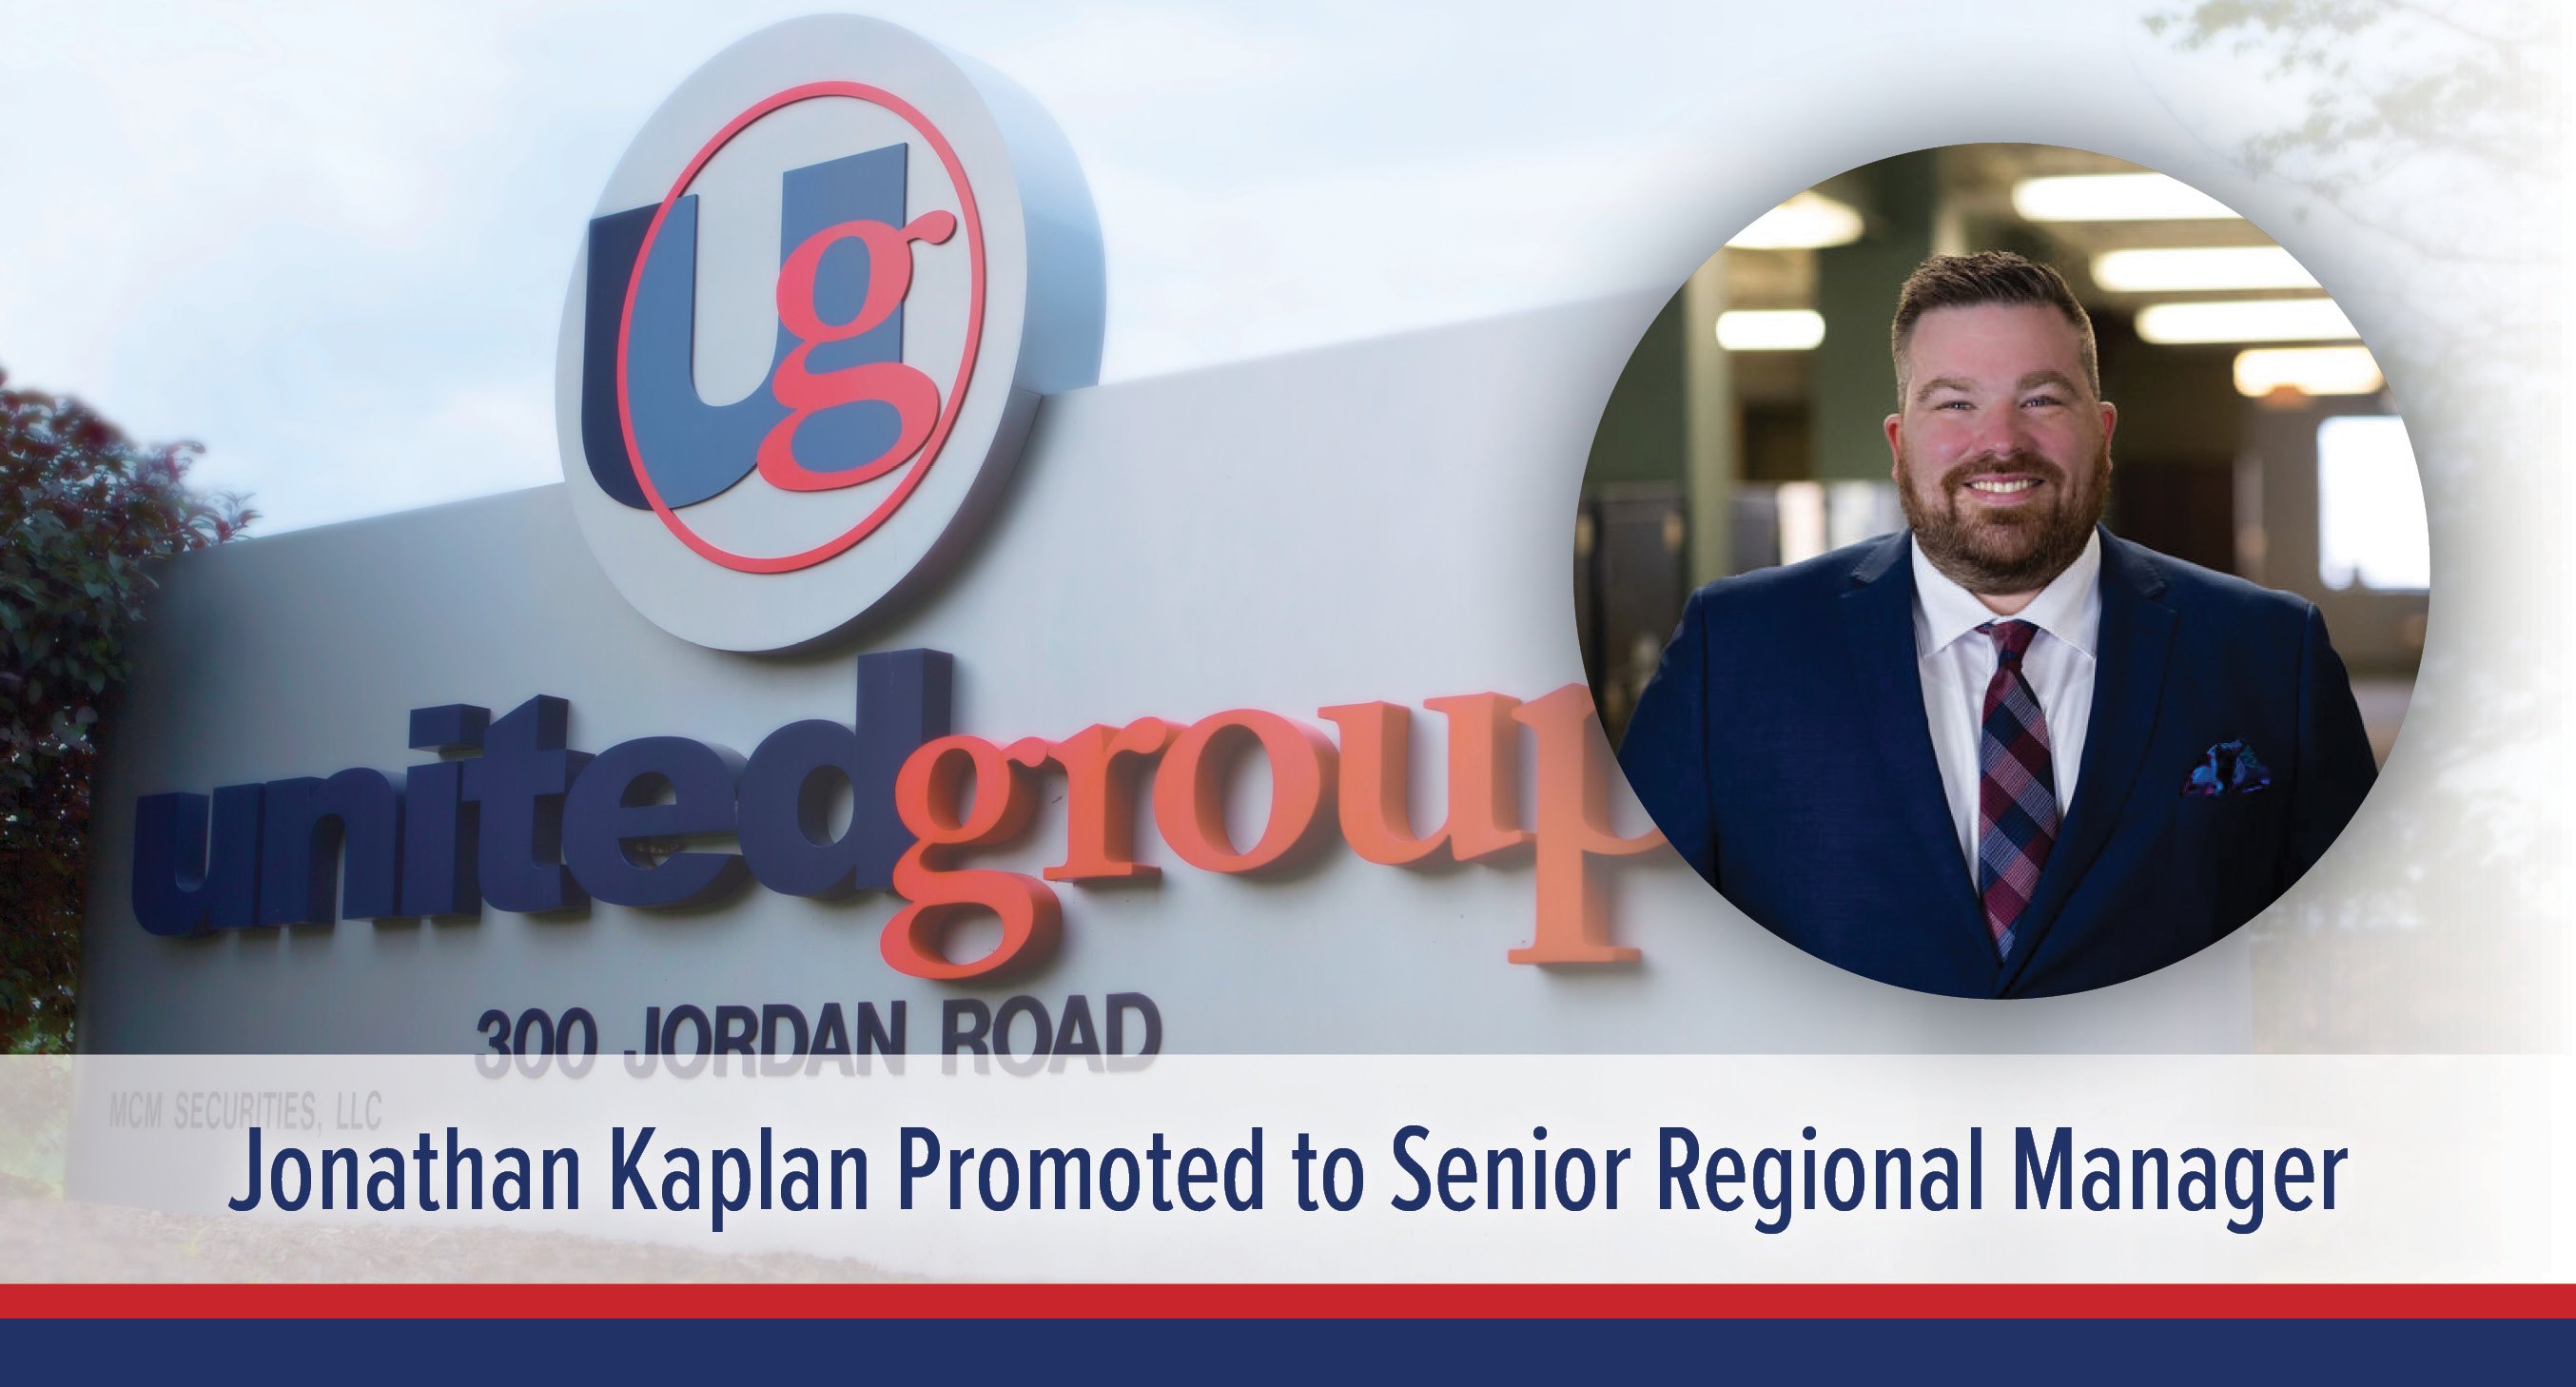 Jonathan Kaplan Promoted to Senior Regional Manager